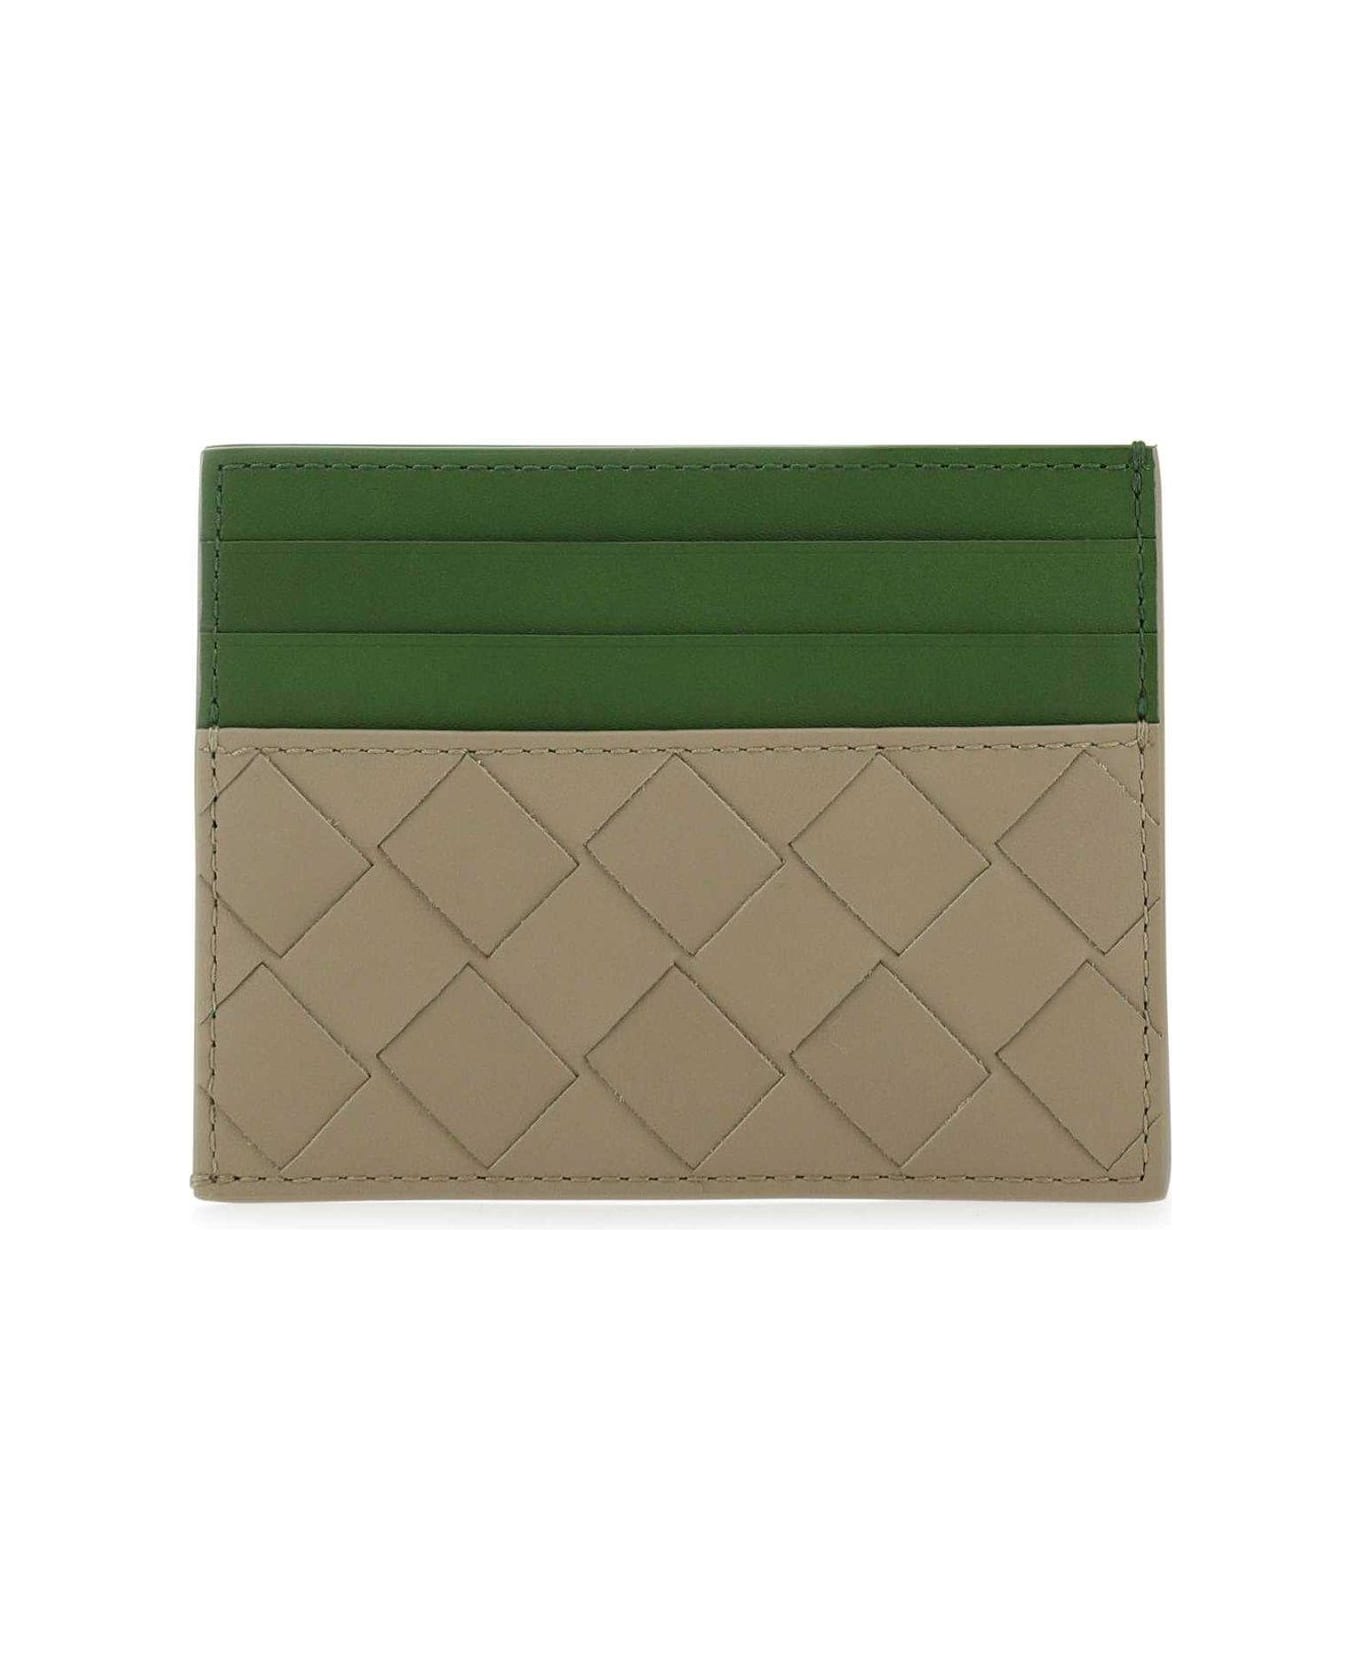 Bottega INTRECCIATO Veneta Woven Leather Card Holder - Taupe, avocado